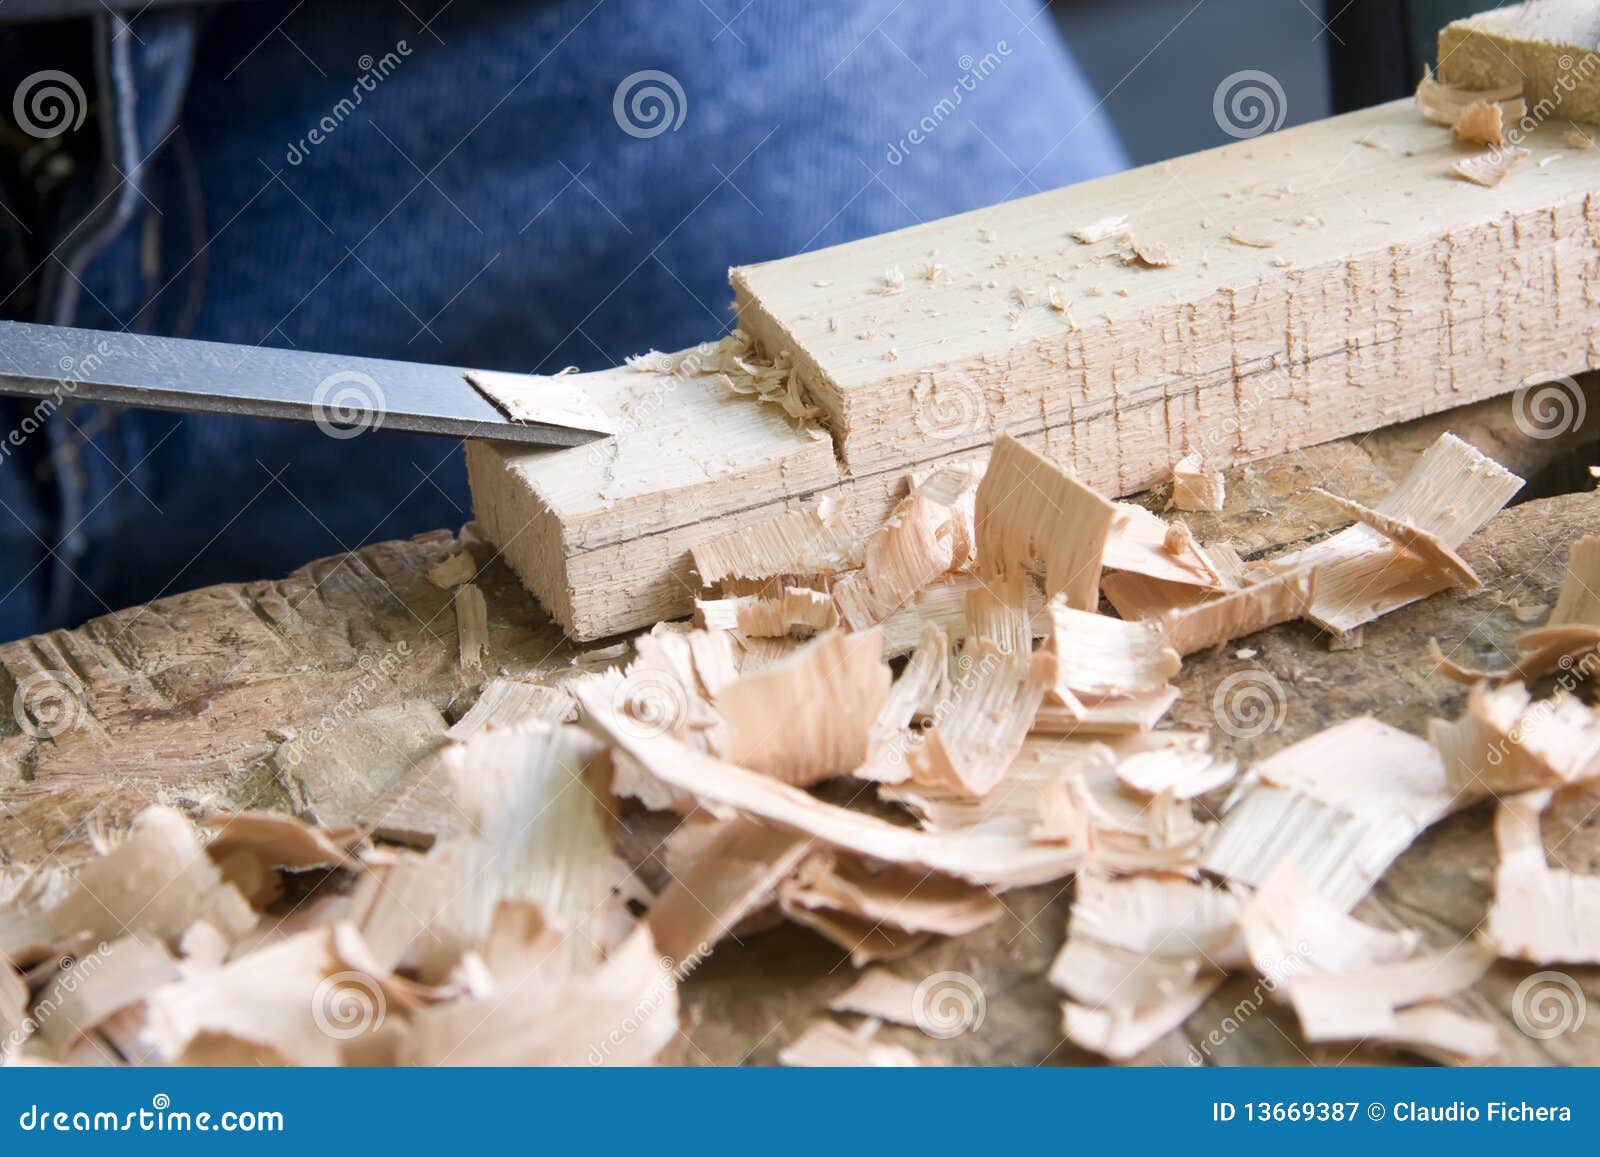 carpentry